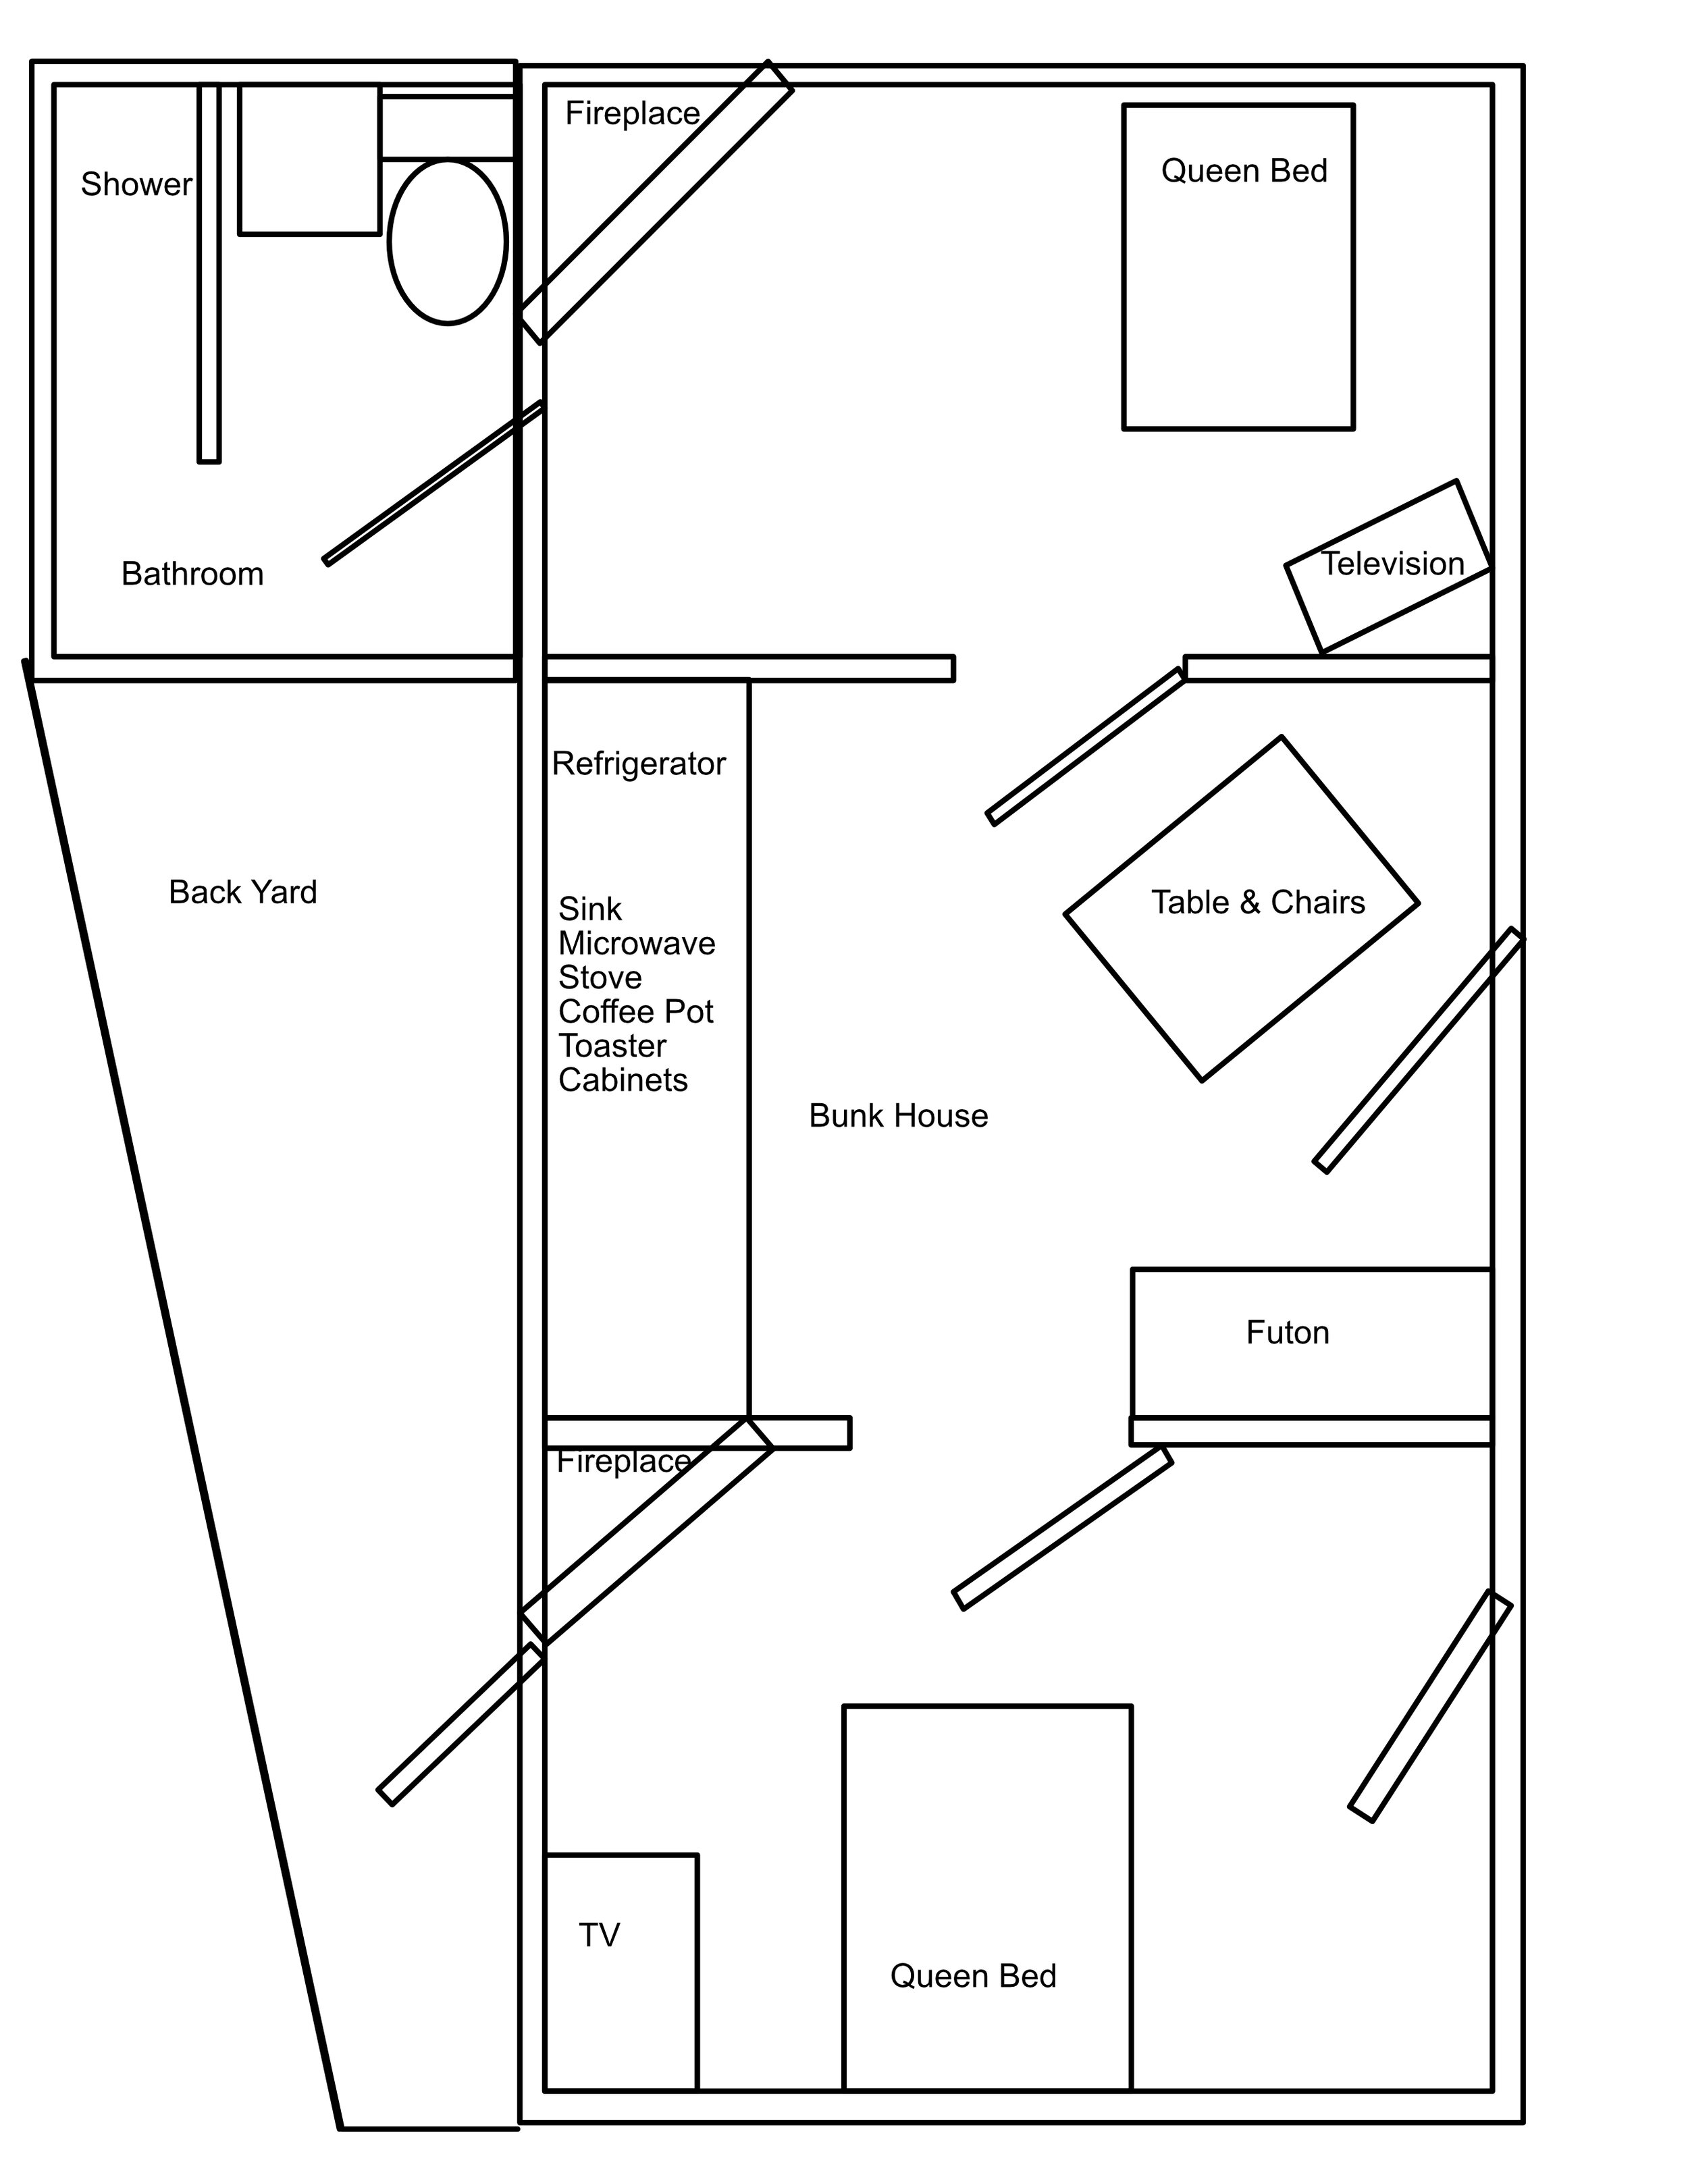 Bunkhouse Floorplan.jpg